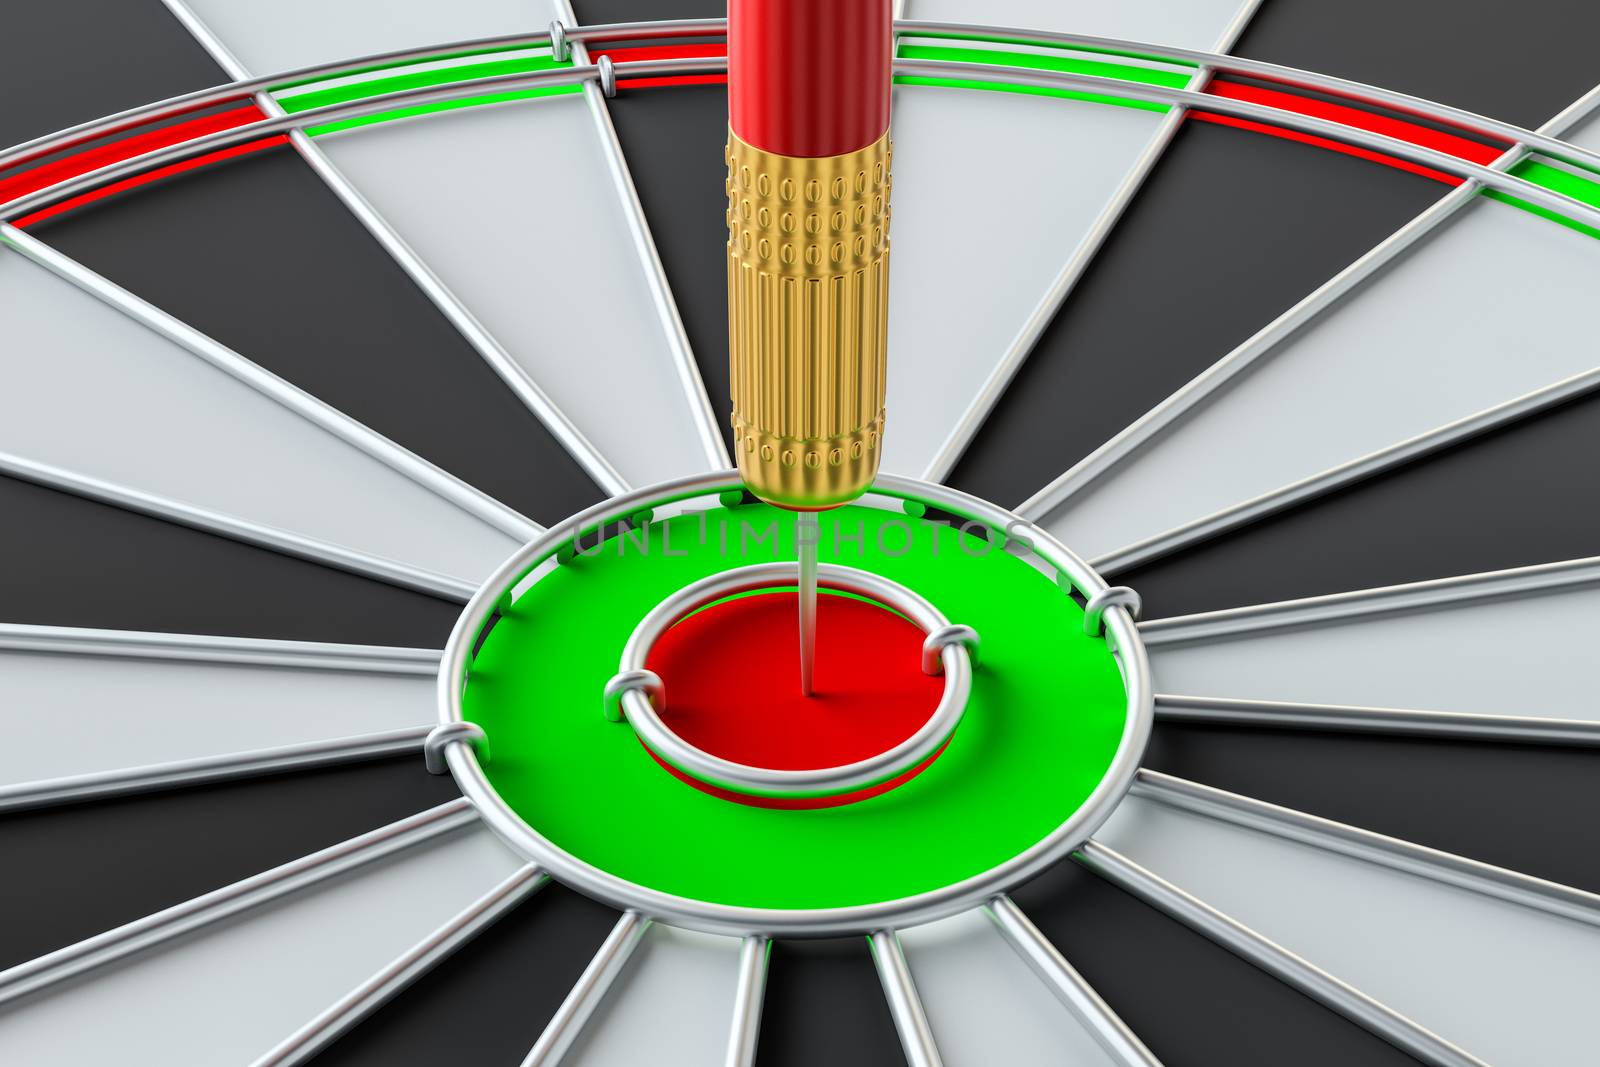 Target dart arrow hitting in the center of dartboard. 3d illustration